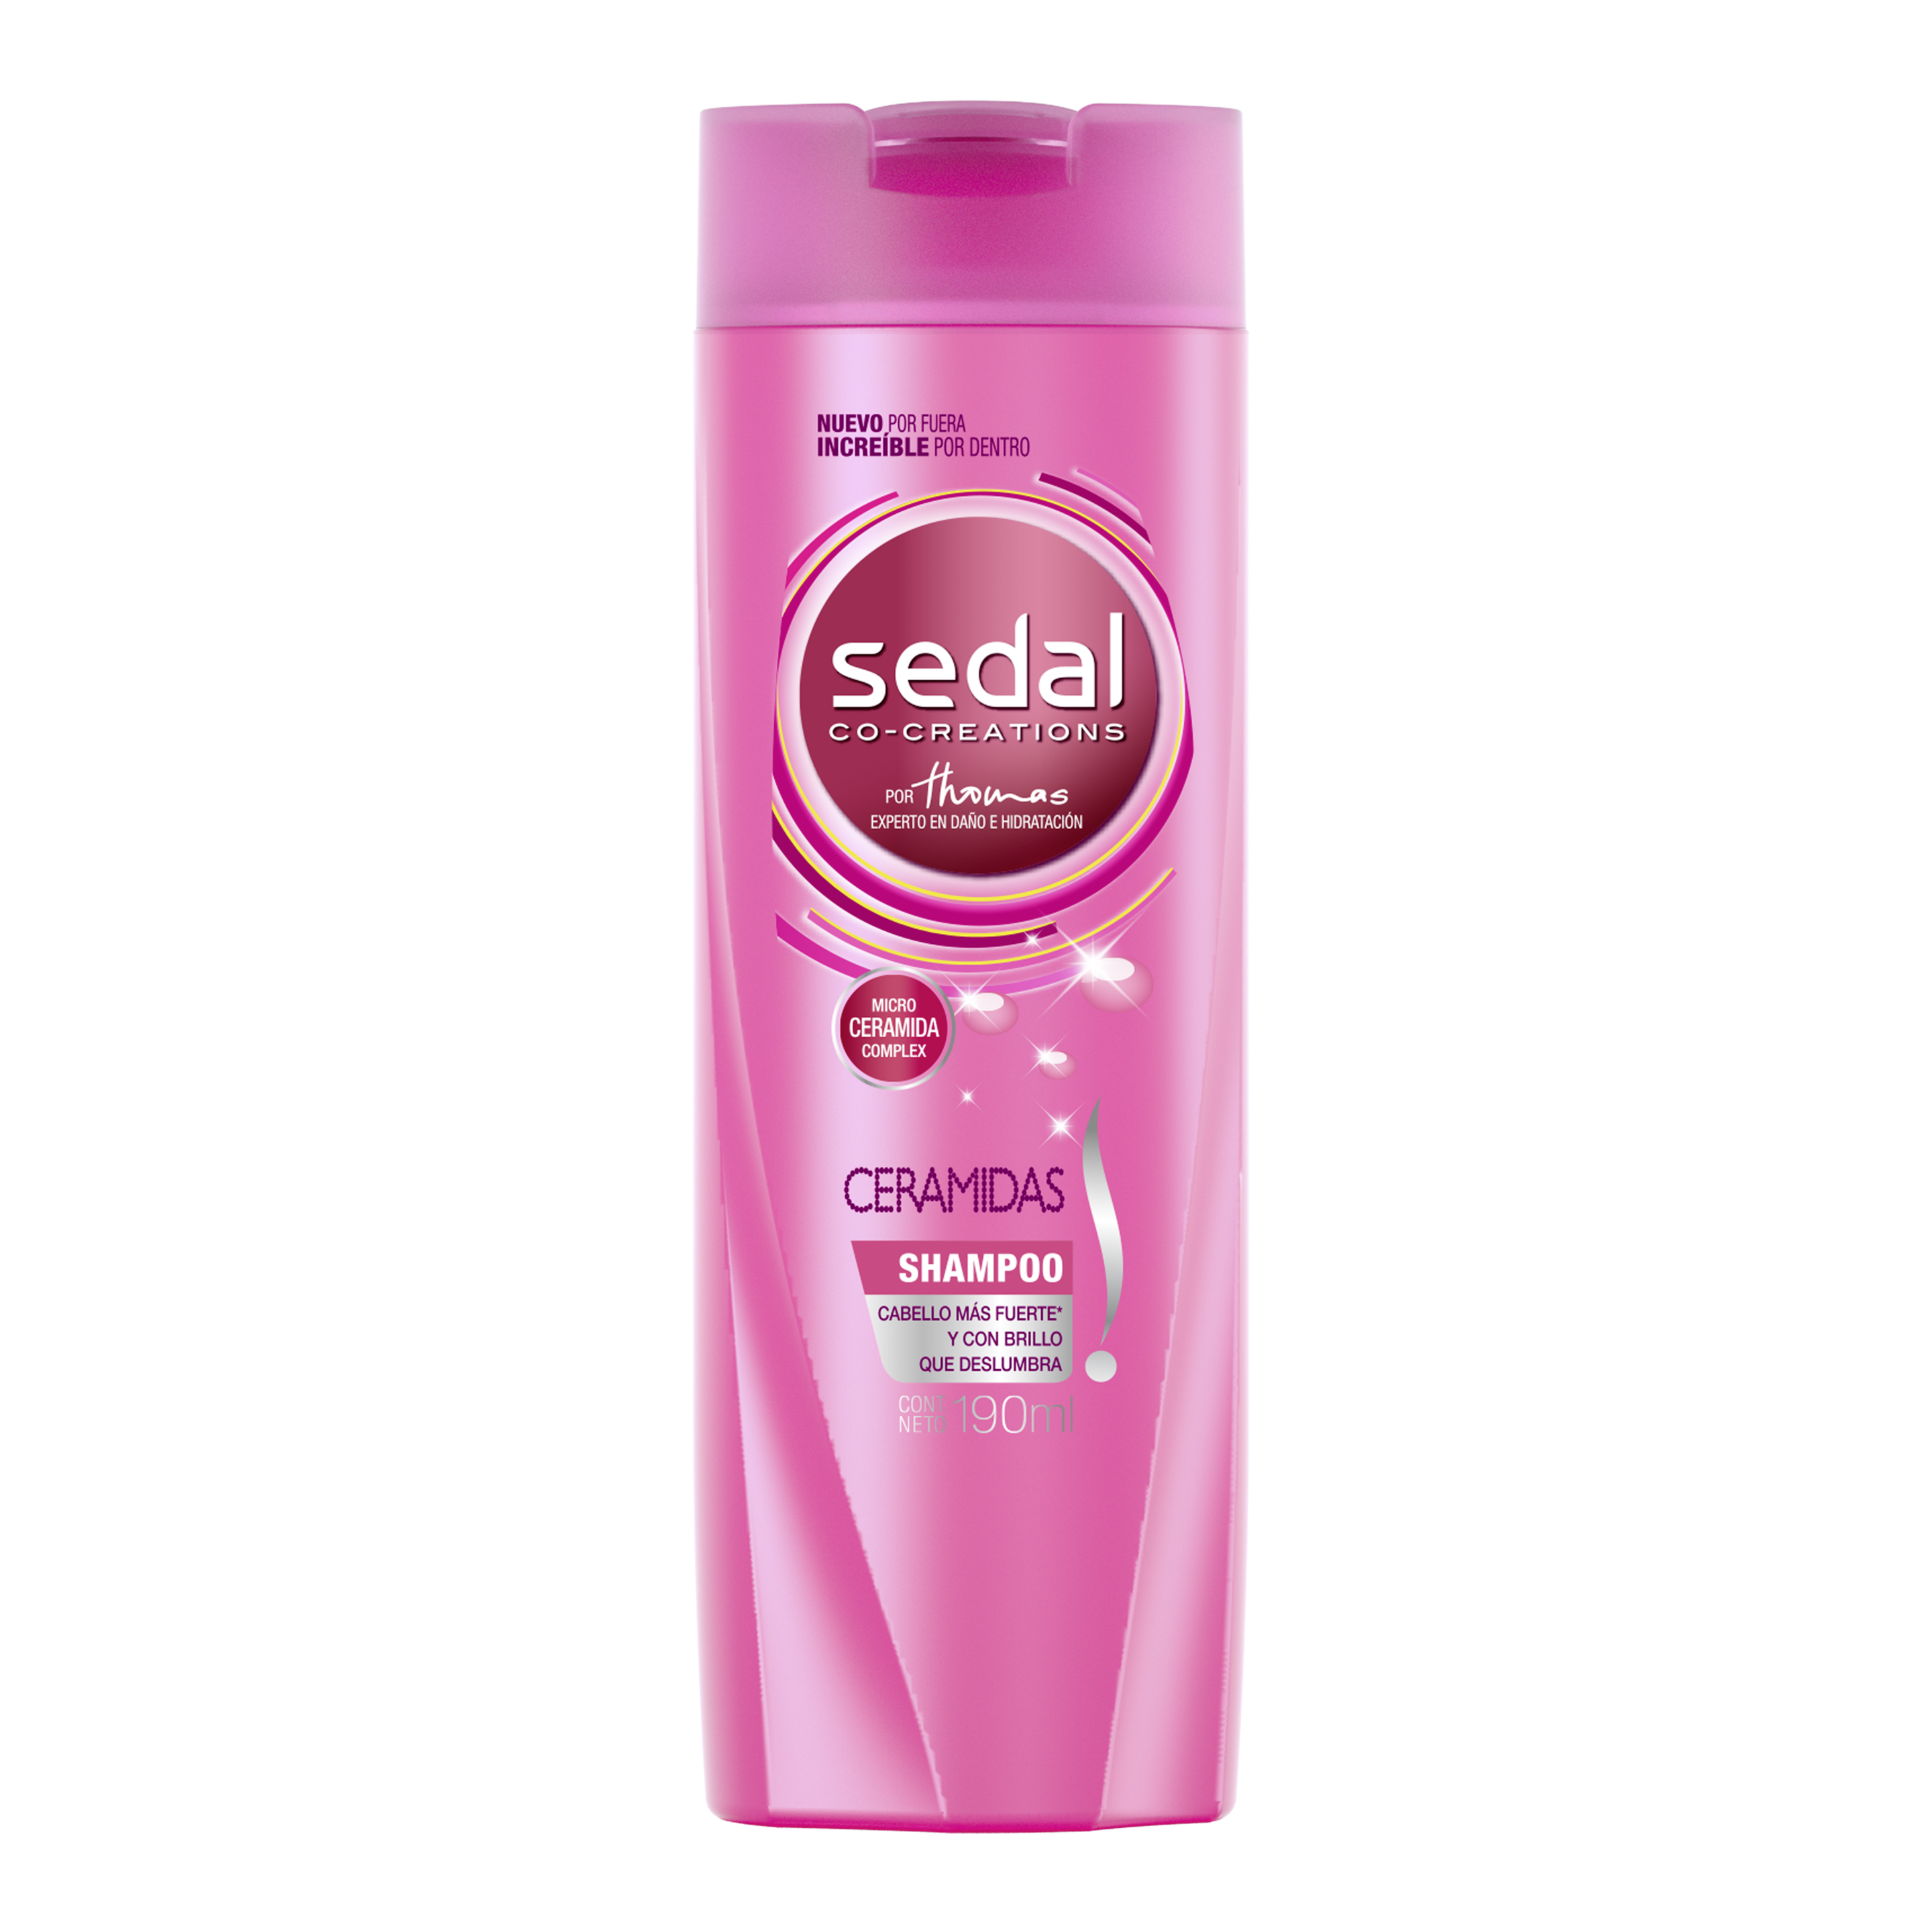 Imagen al frente del paquete Sedal Shampoo Ceramidas 190 ml